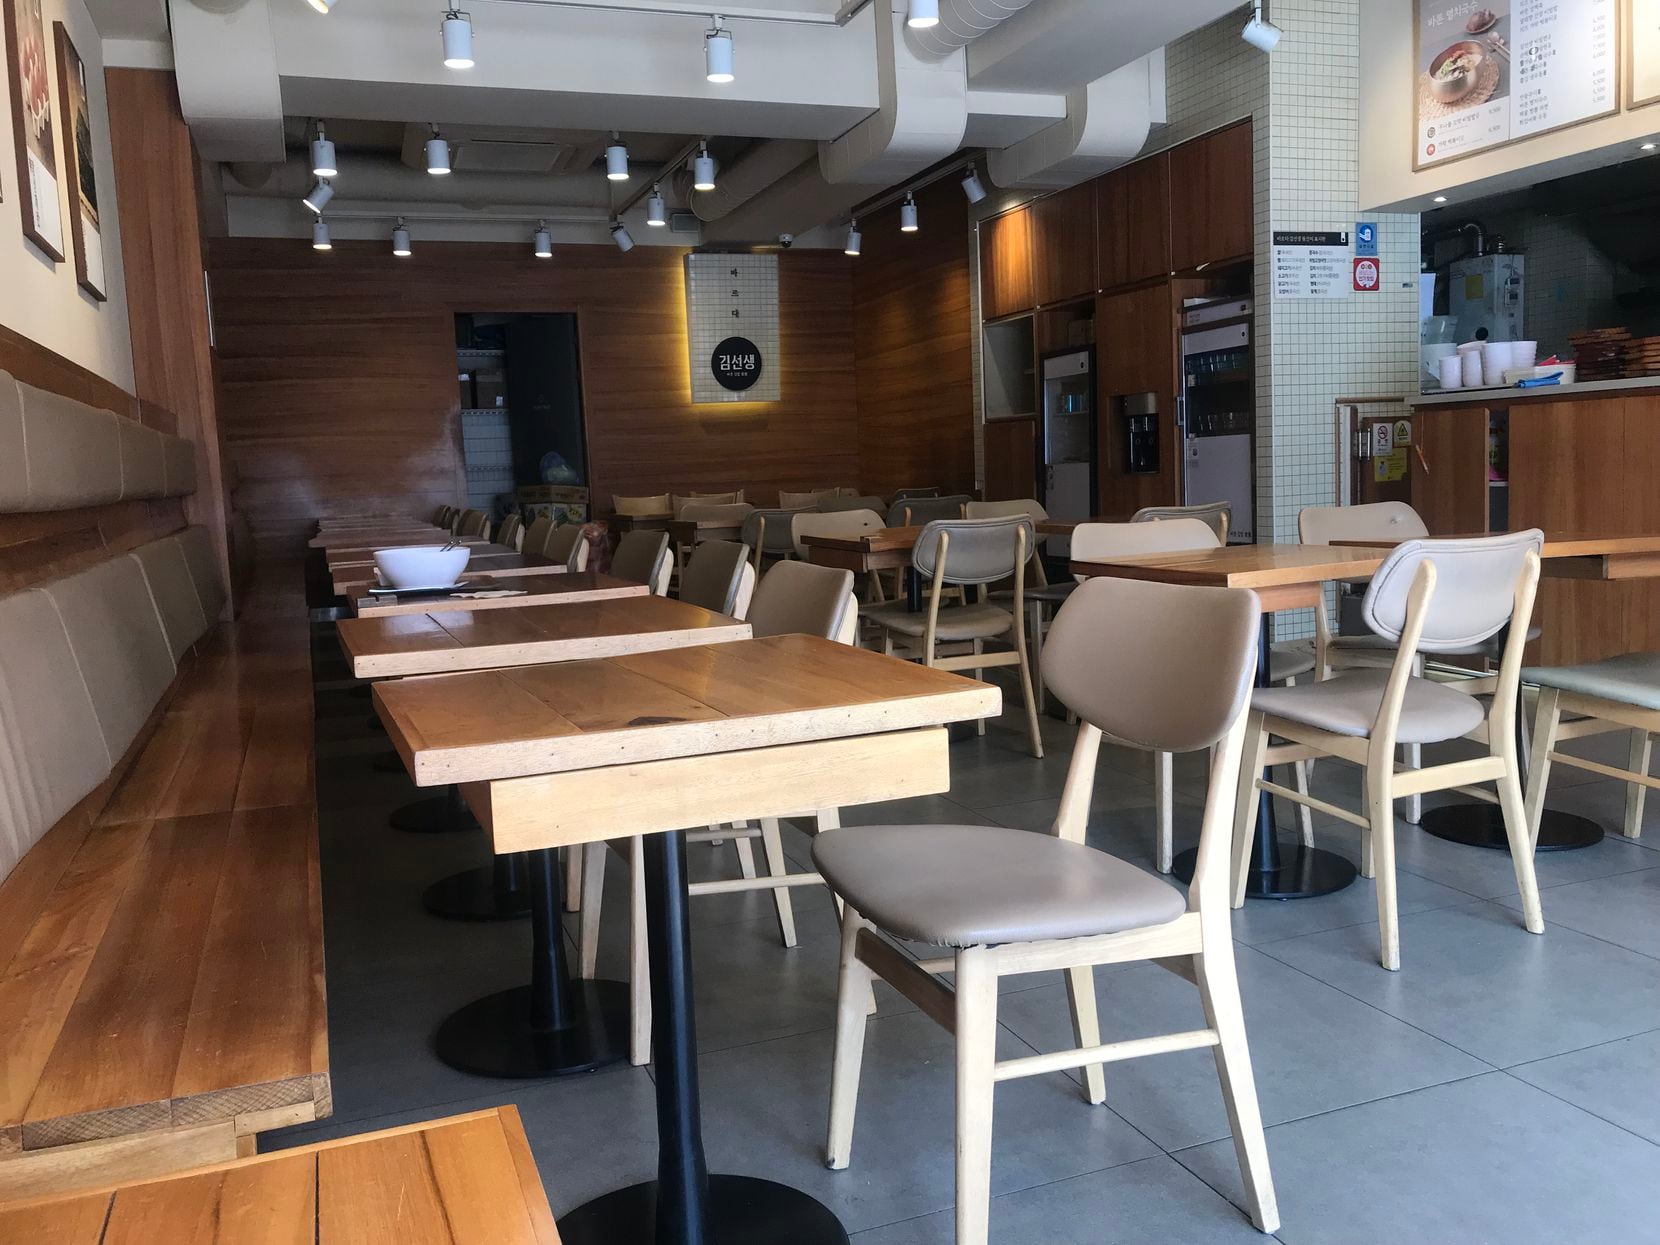 Restaurants in Seoul are largely empty amid the coronavirus outbreak.